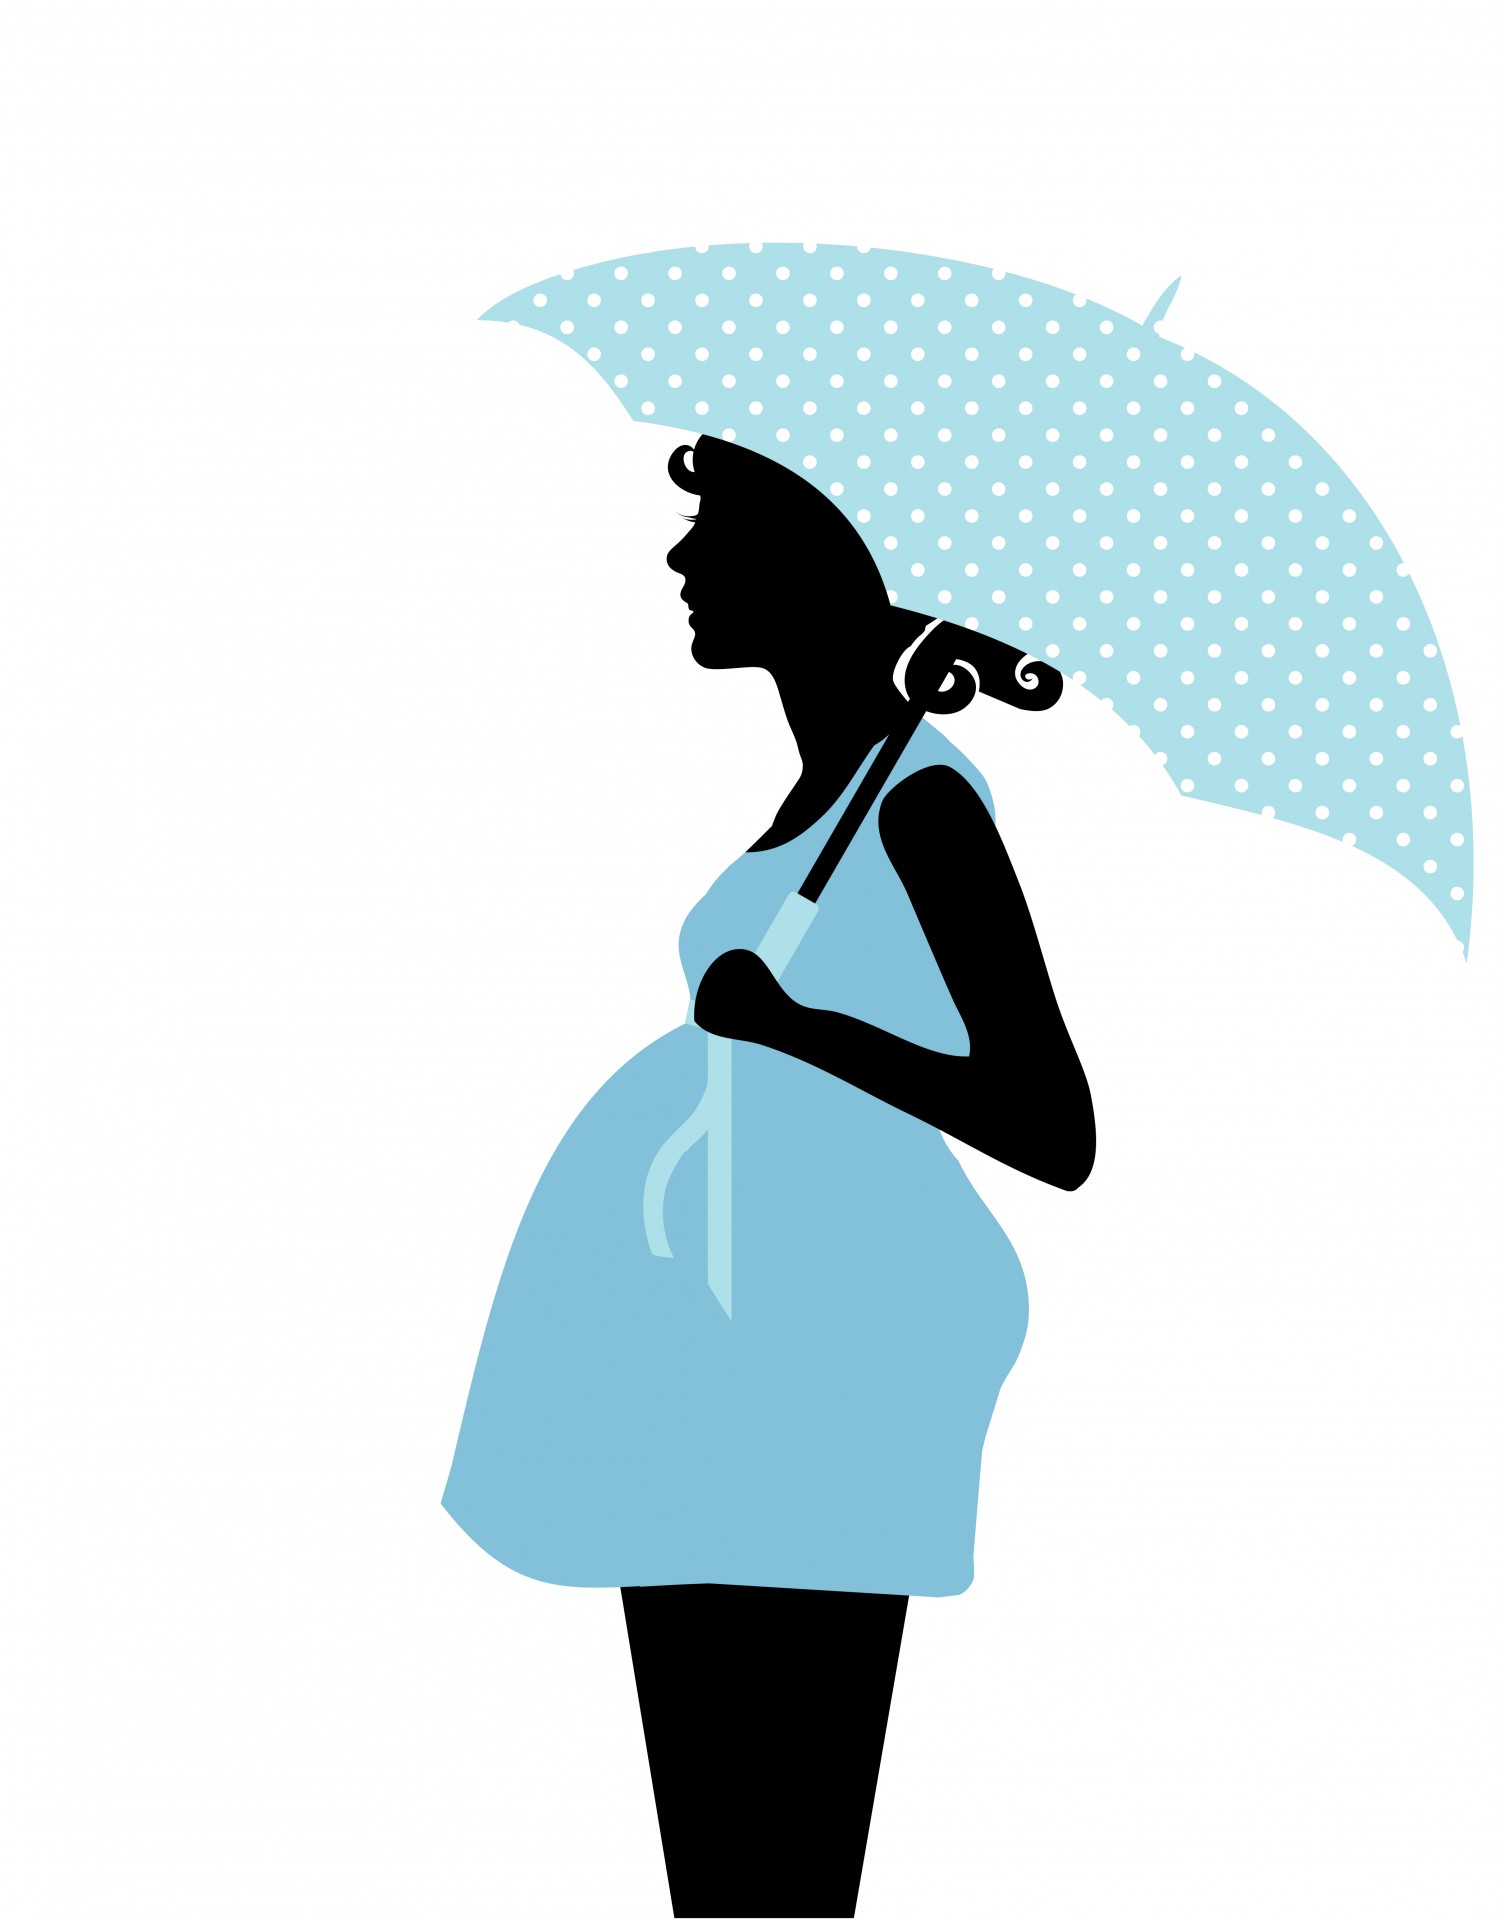 Pregnancy clip art image 